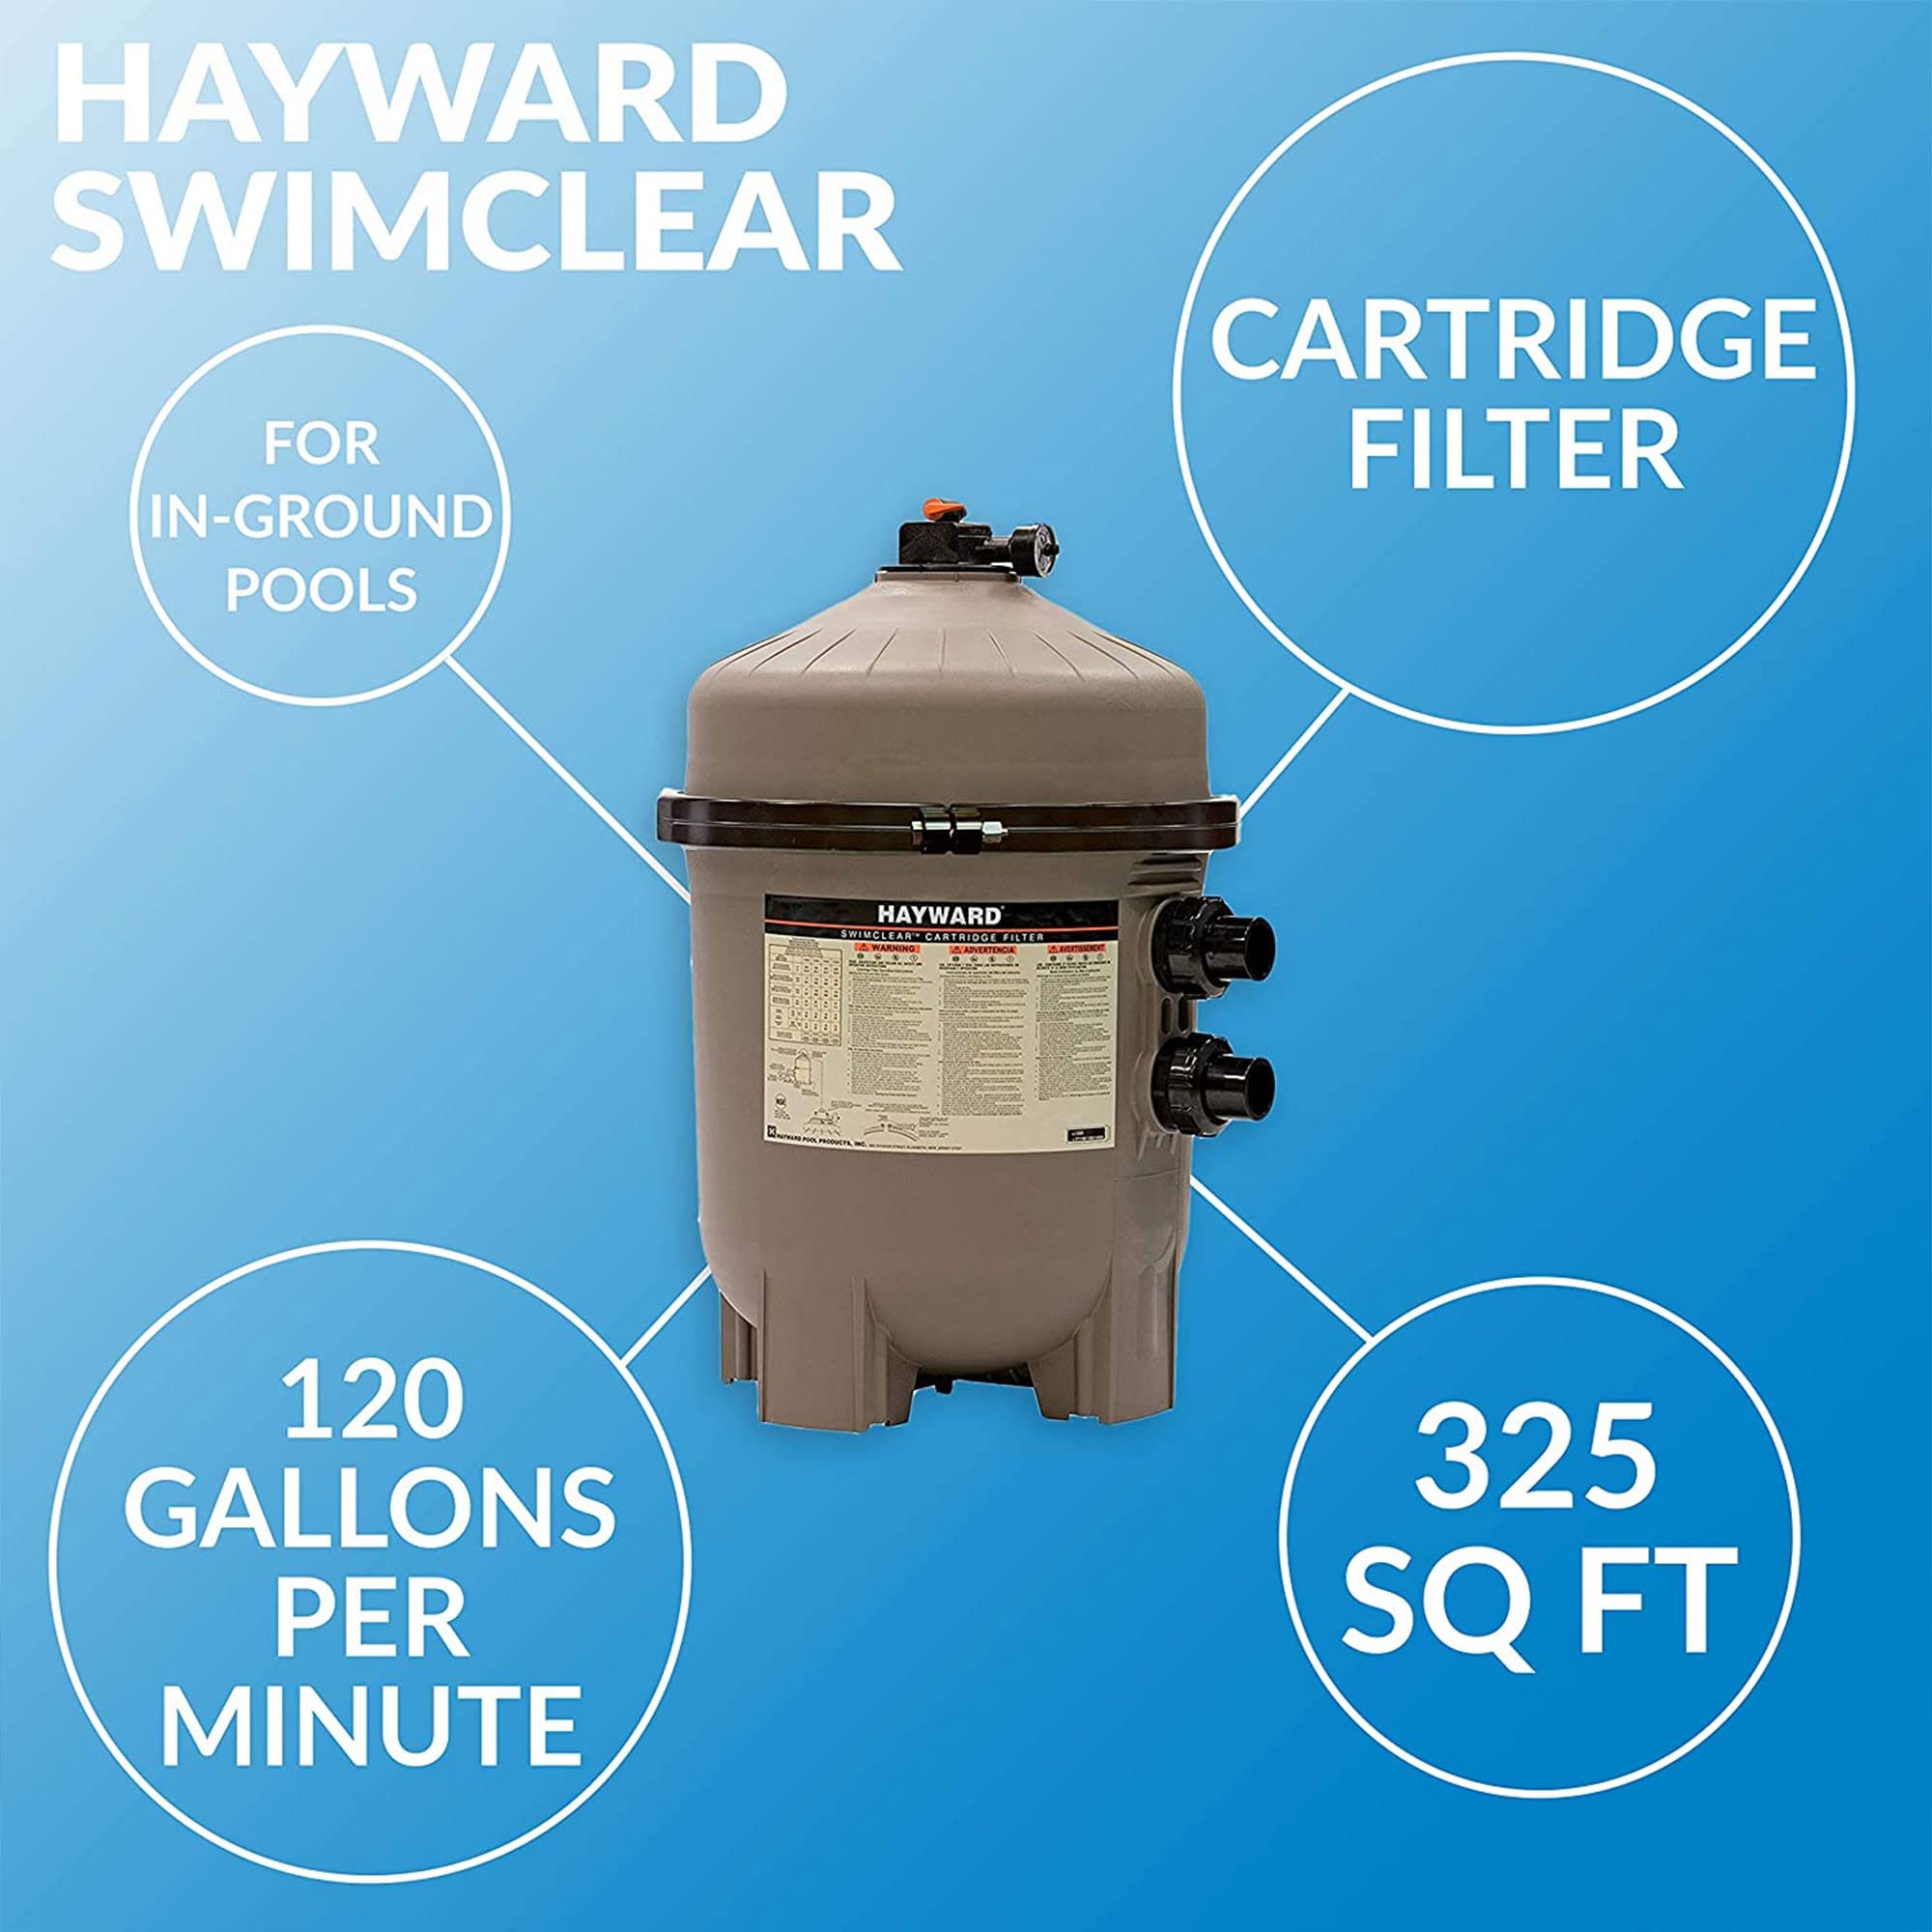 Hayward W3C3030 SwimClear Cartridge Pool Filter, 325 Sq. Ft.